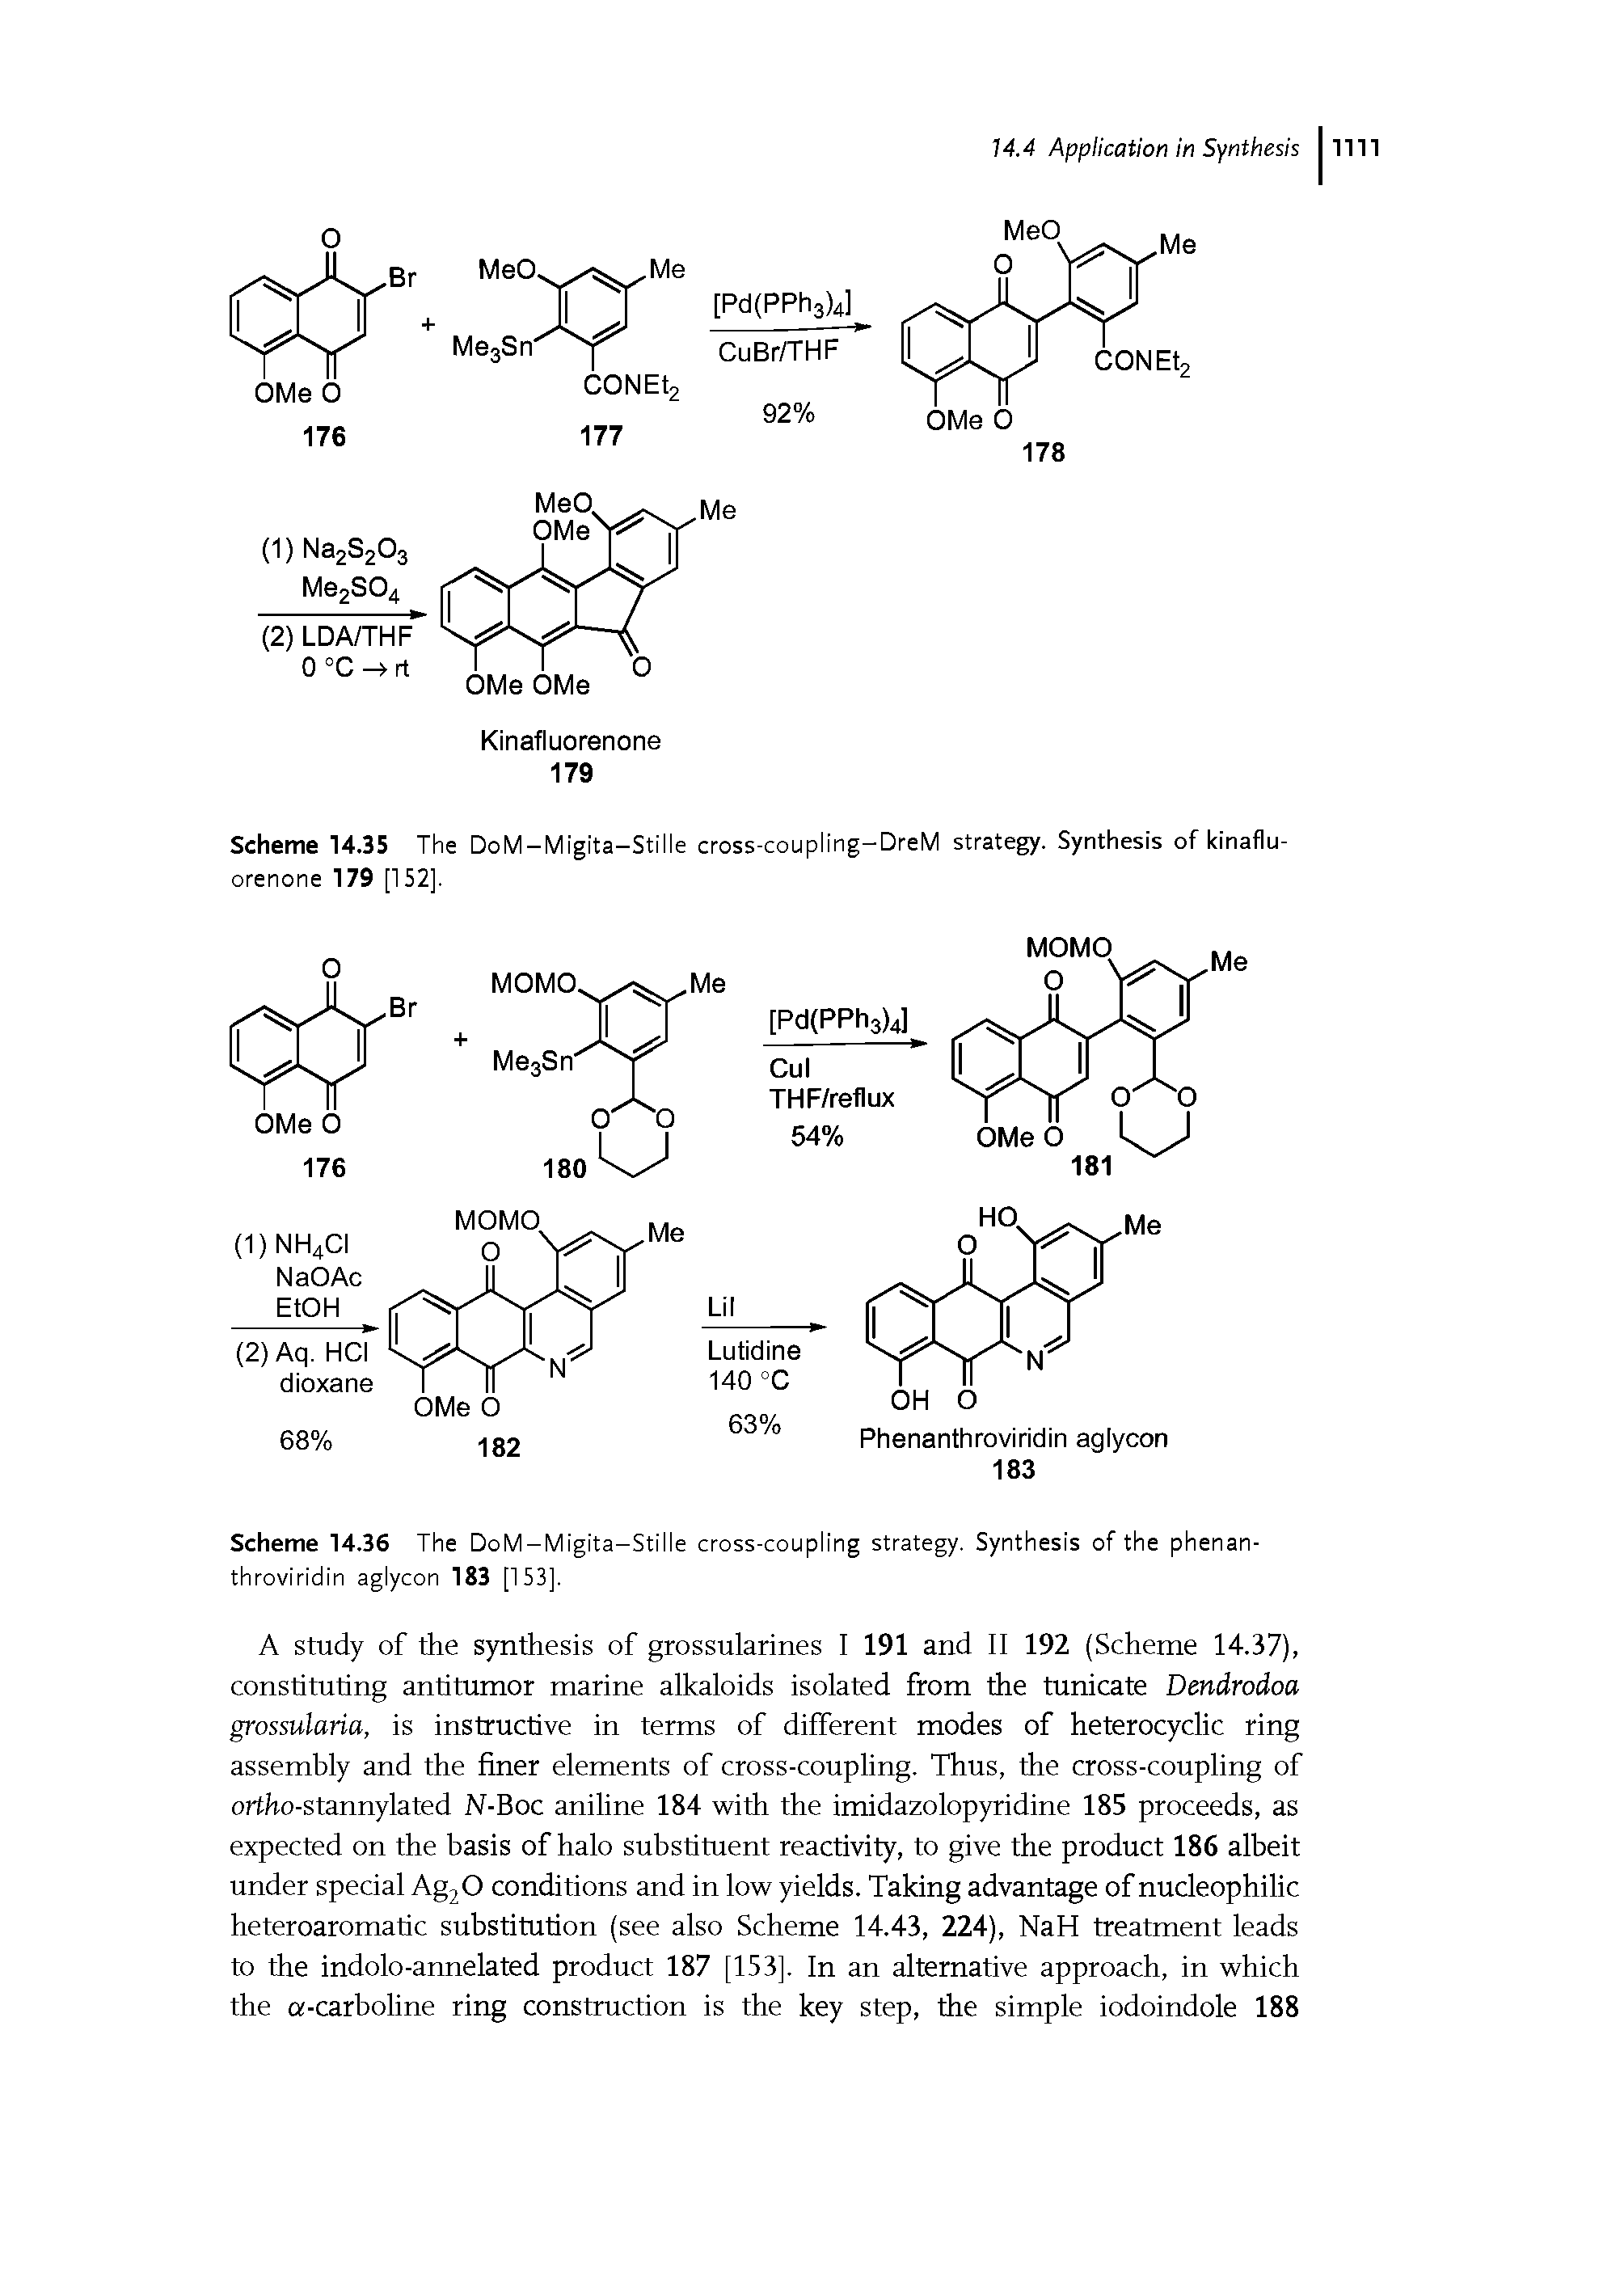 Scheme 14.35 The DoM-Migita-Stille cross-coupling-DreM strategy. Synthesis of kinafluorenone 179 [152].